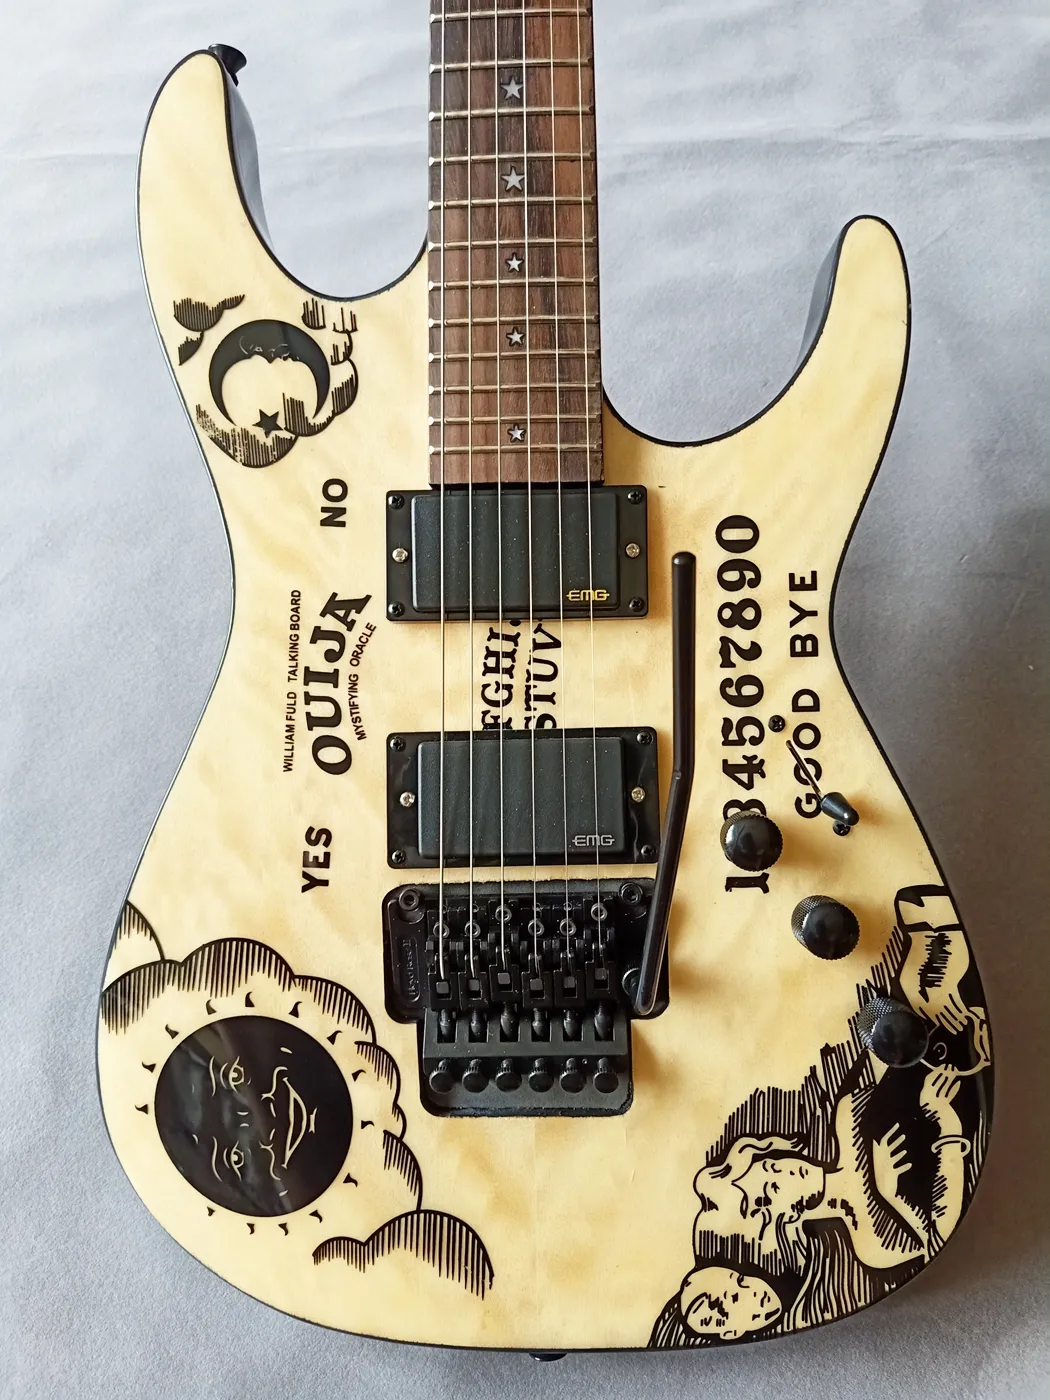 Feito personalizado revela kirk hammett assinatura kh ouija guitarra natural pickups e tremolo guitarra ponte preta de hardware livre